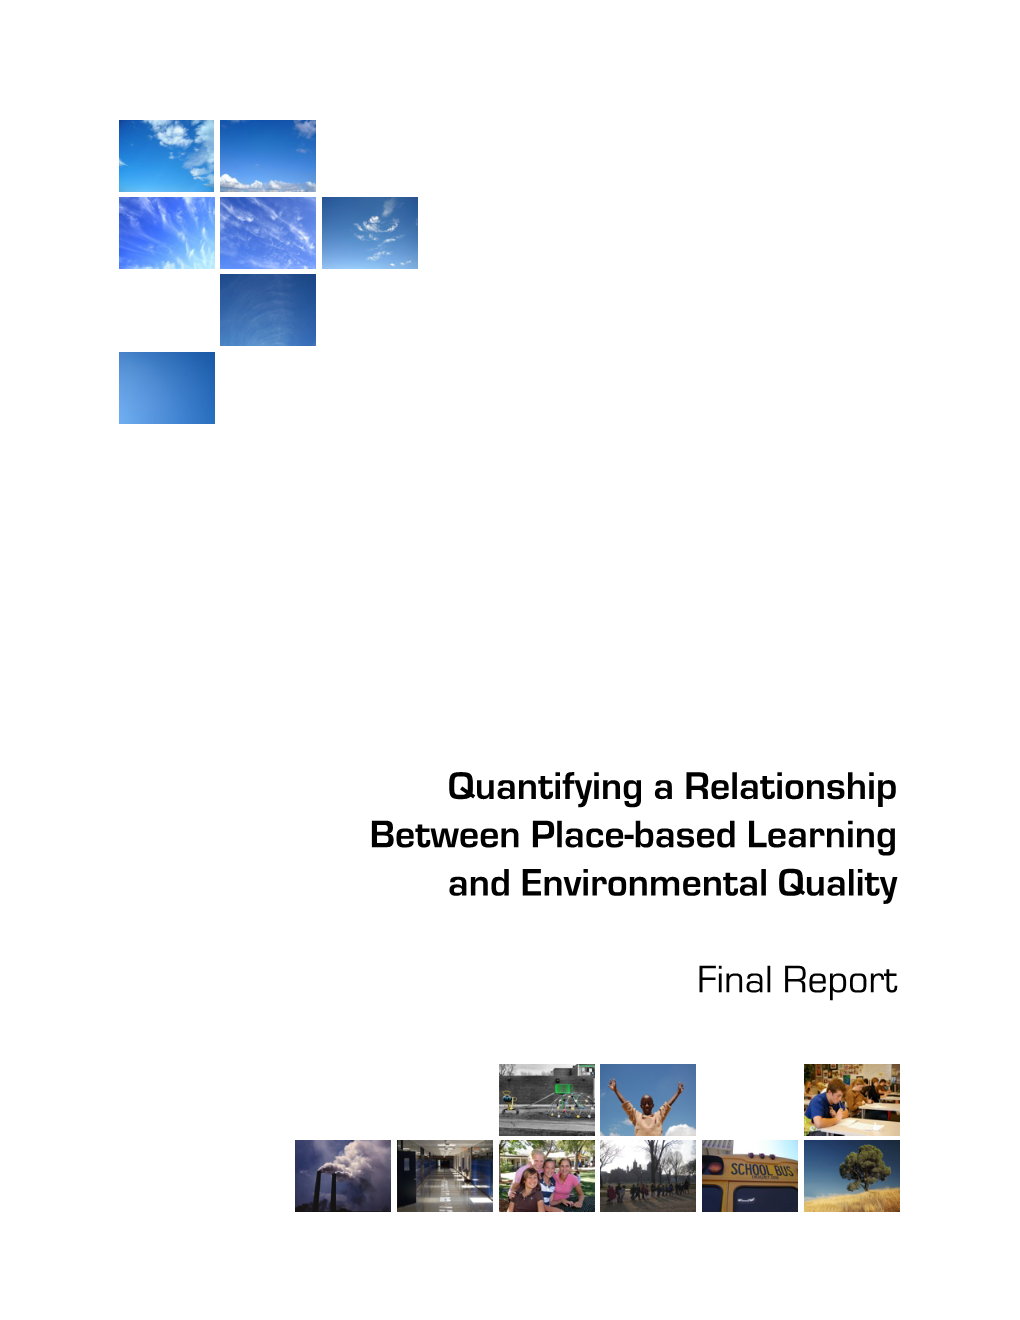 PBL-EQ Final Research Report 2008